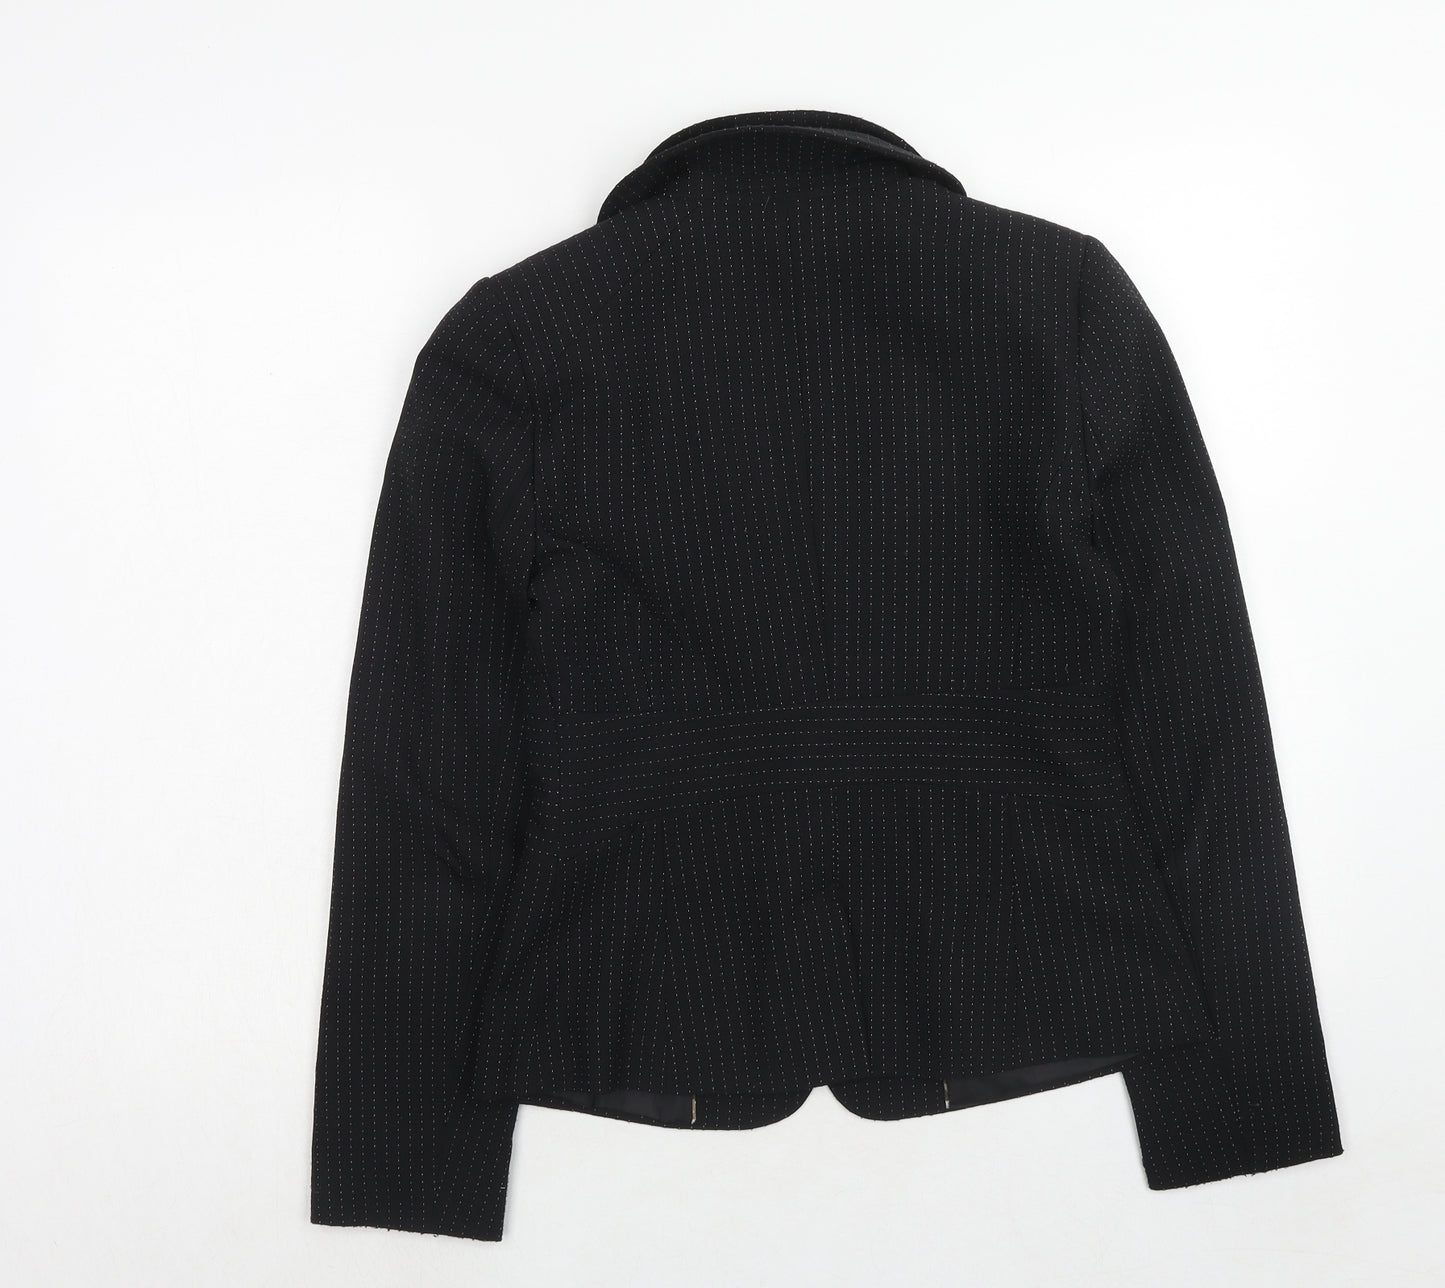 iyen Womens Black Polka Dot Polyester Jacket Blazer Size 10